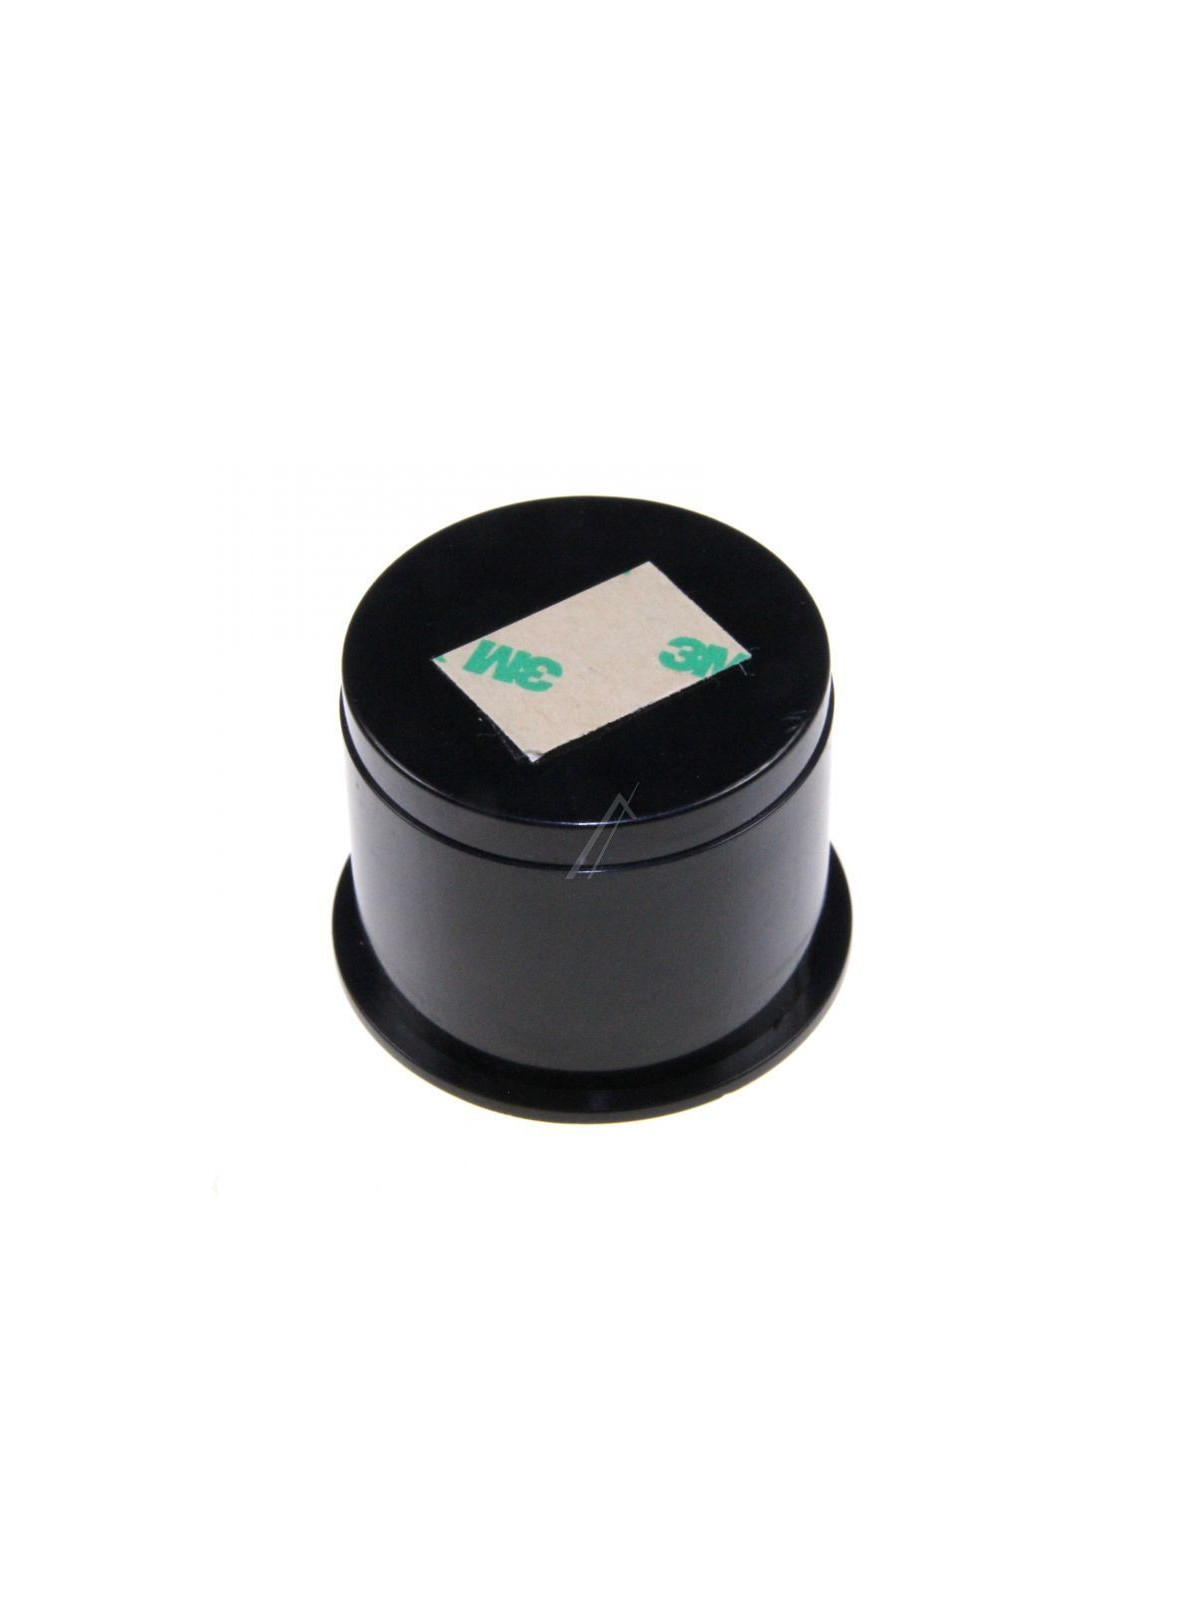 Bouton de programme Samsung CE137 - Micro-ondes